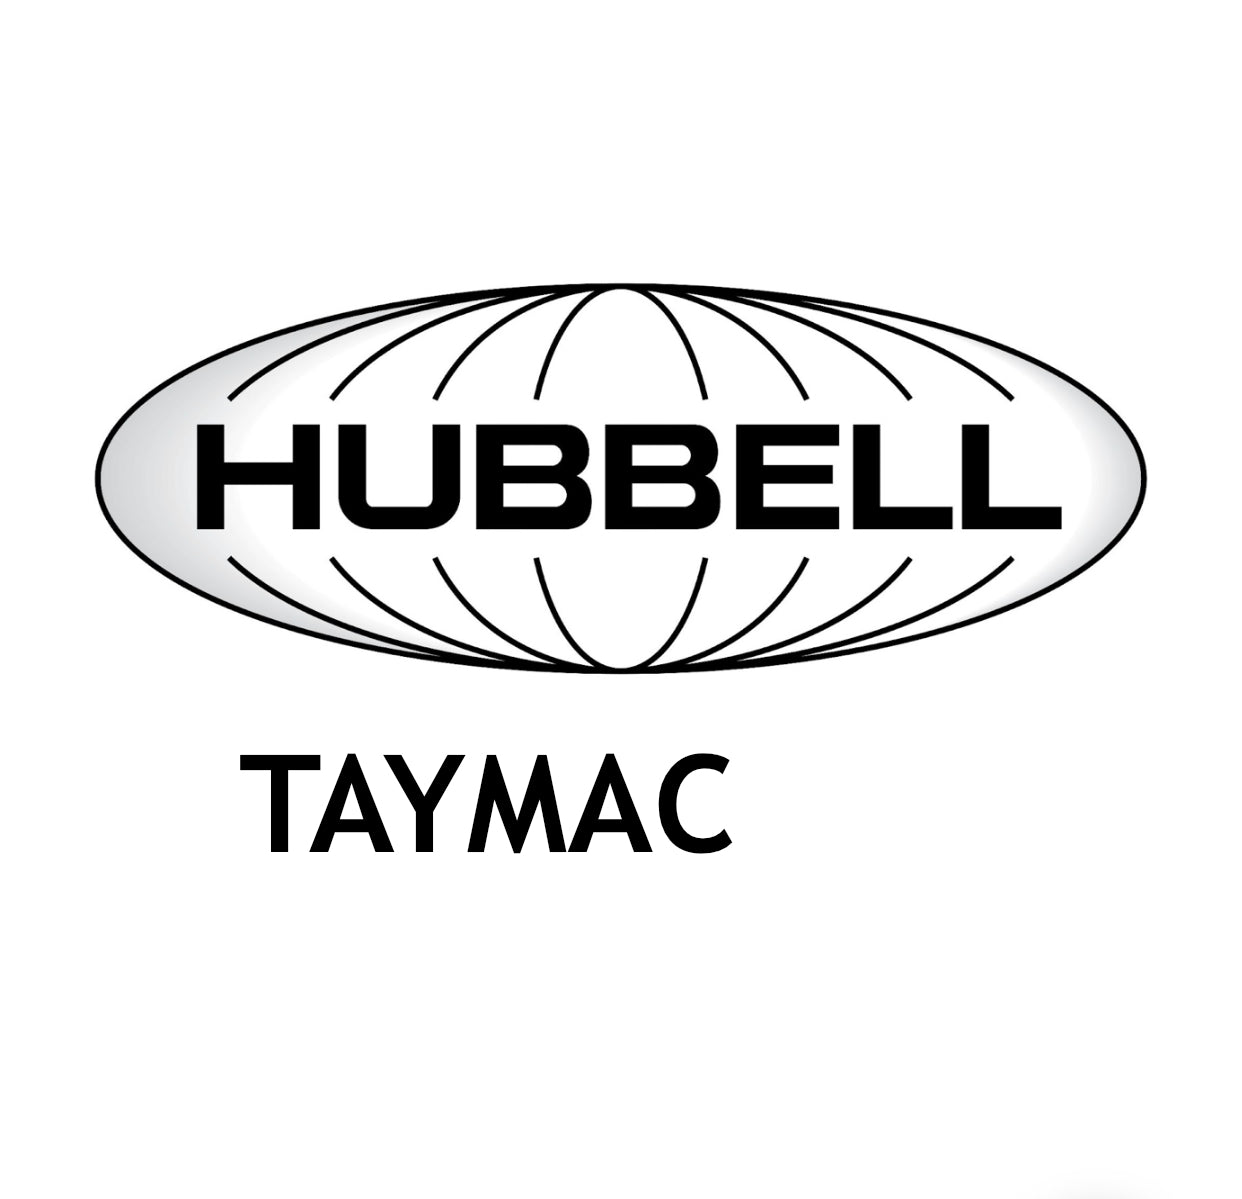 HUBBELL TAYMAC